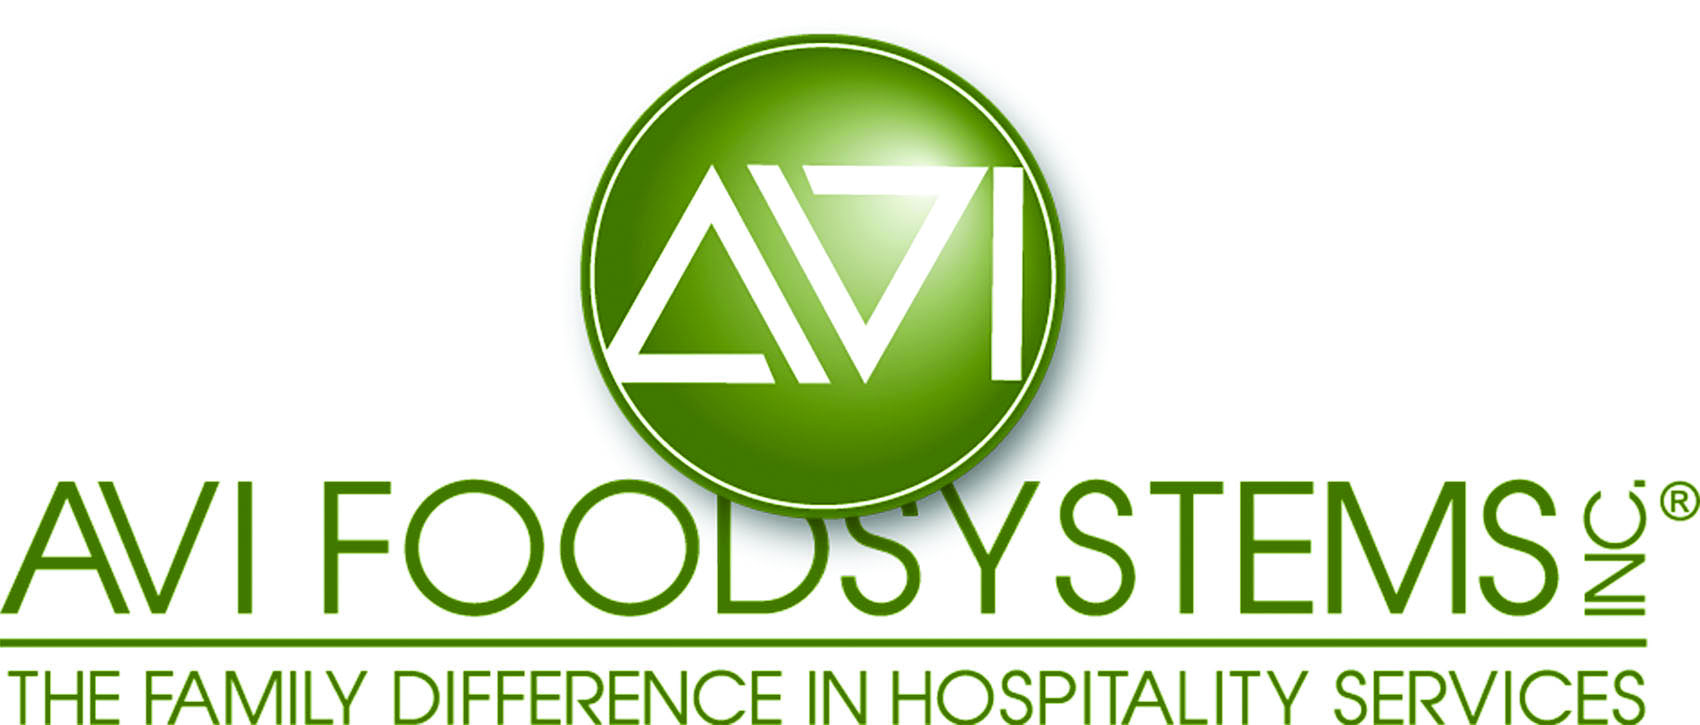 AVI Foodsystems Logo